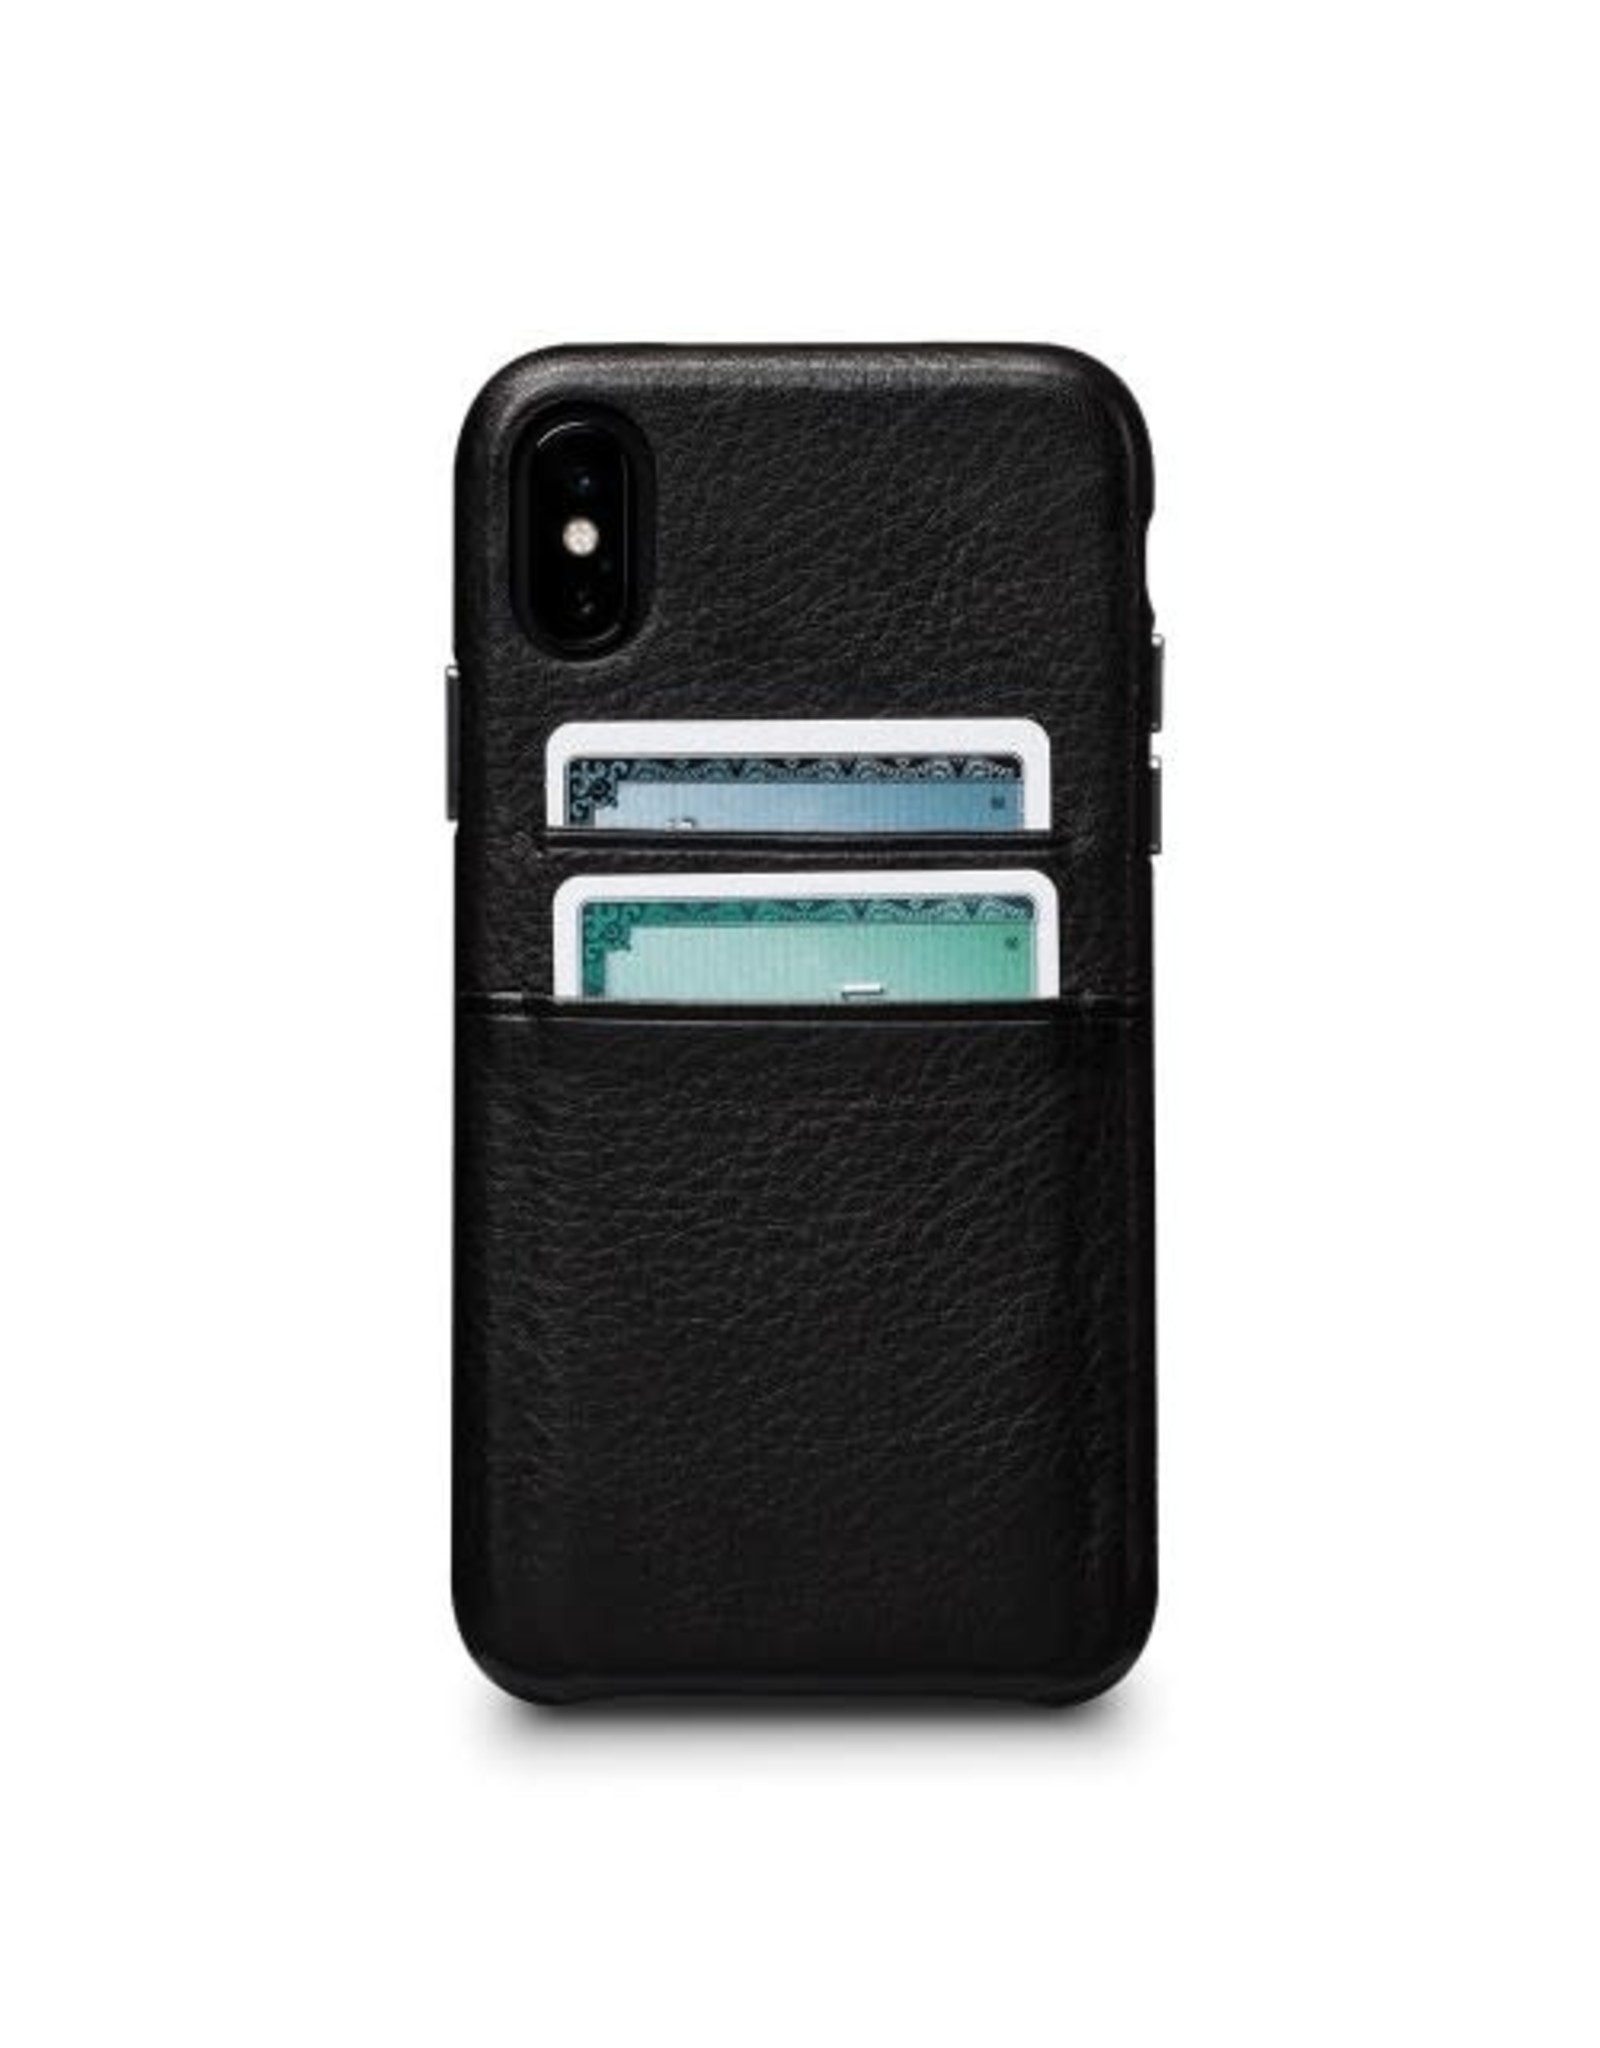 SENA Sena Bence Snap-on Leather Wallet case for iPhone X - Black EOL